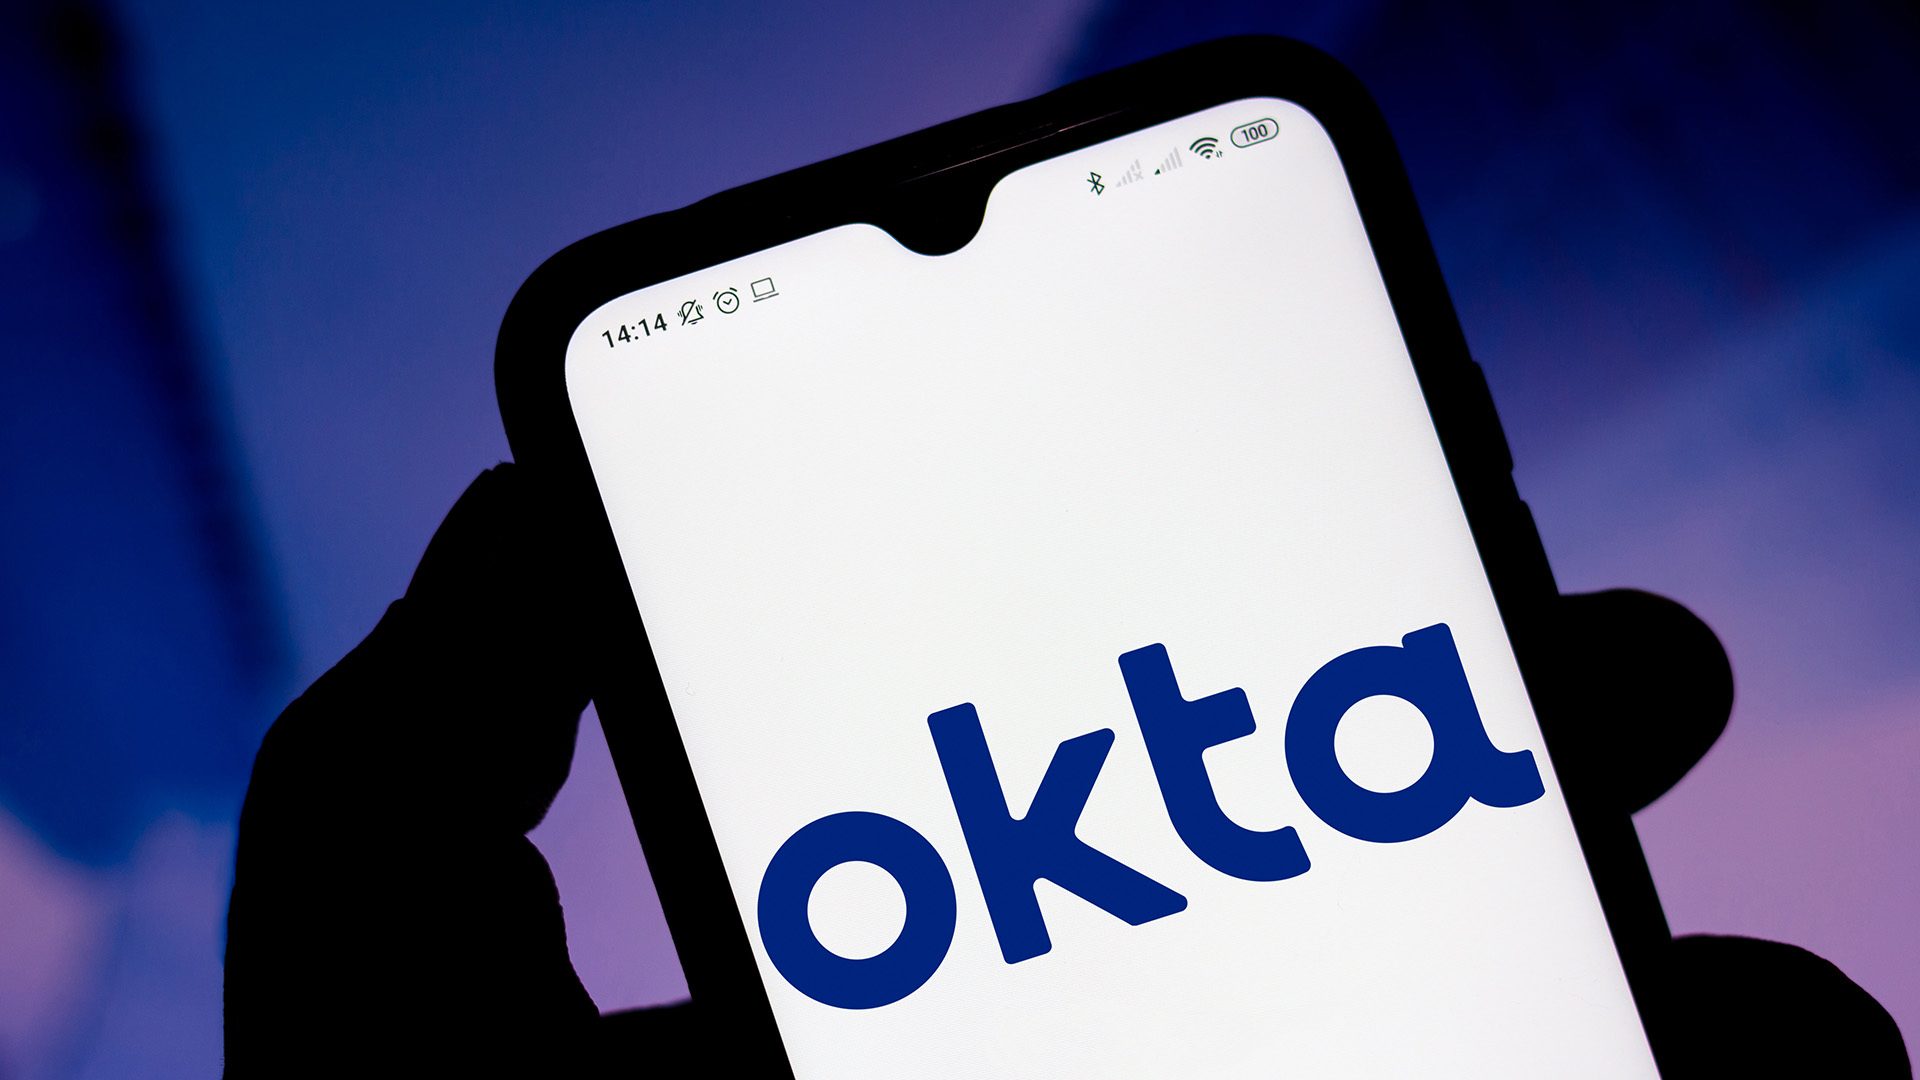 Suspected Okta hackers arrested by British police